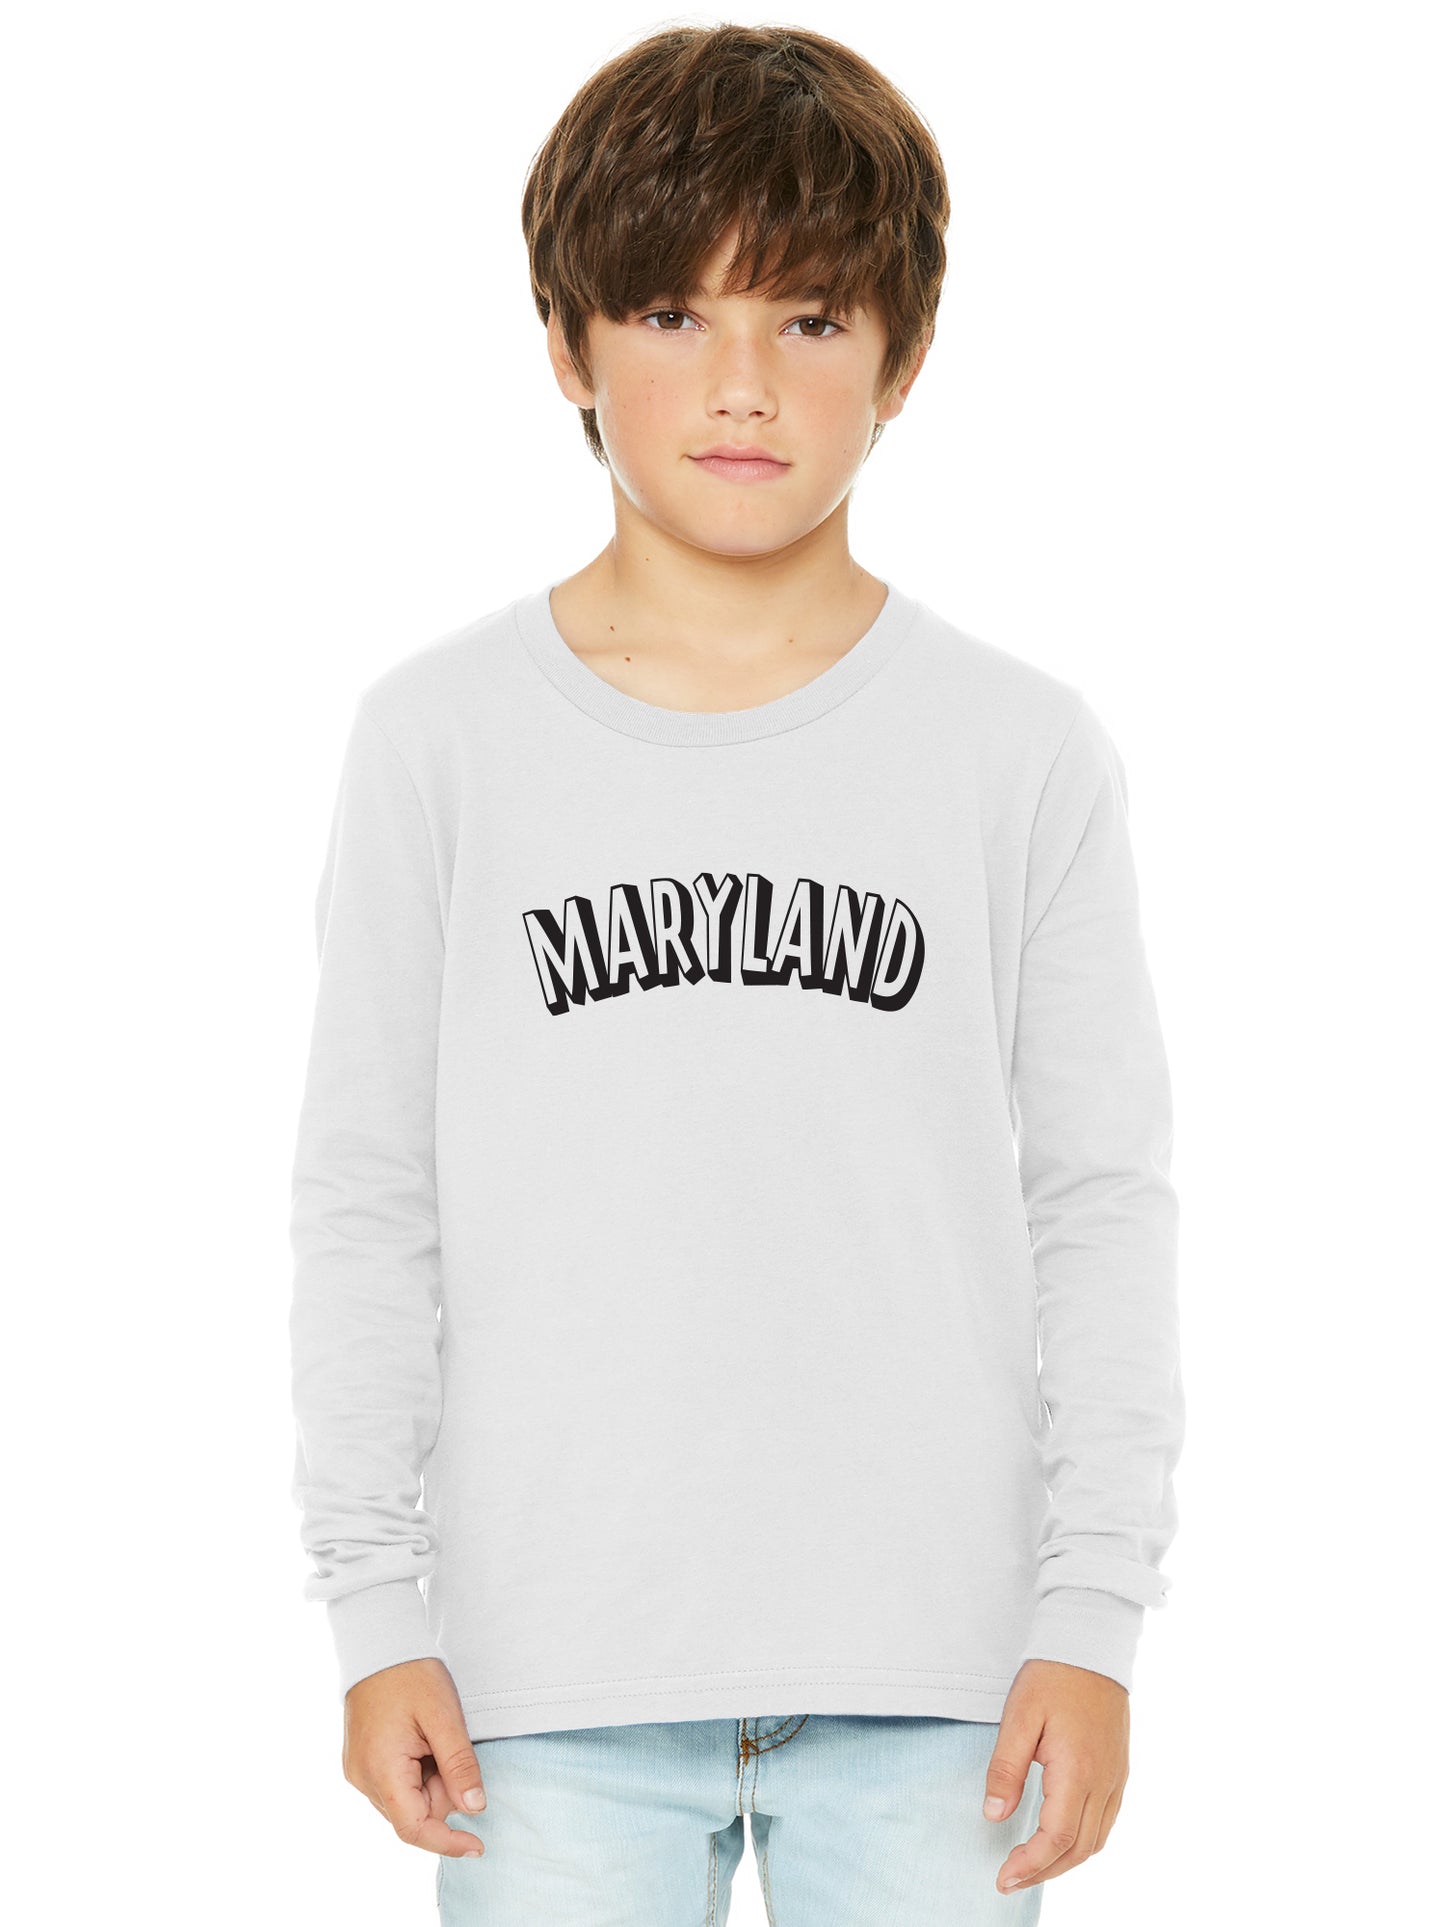 Daxton Youth Long Sleeve Maryland Basic Tshirt